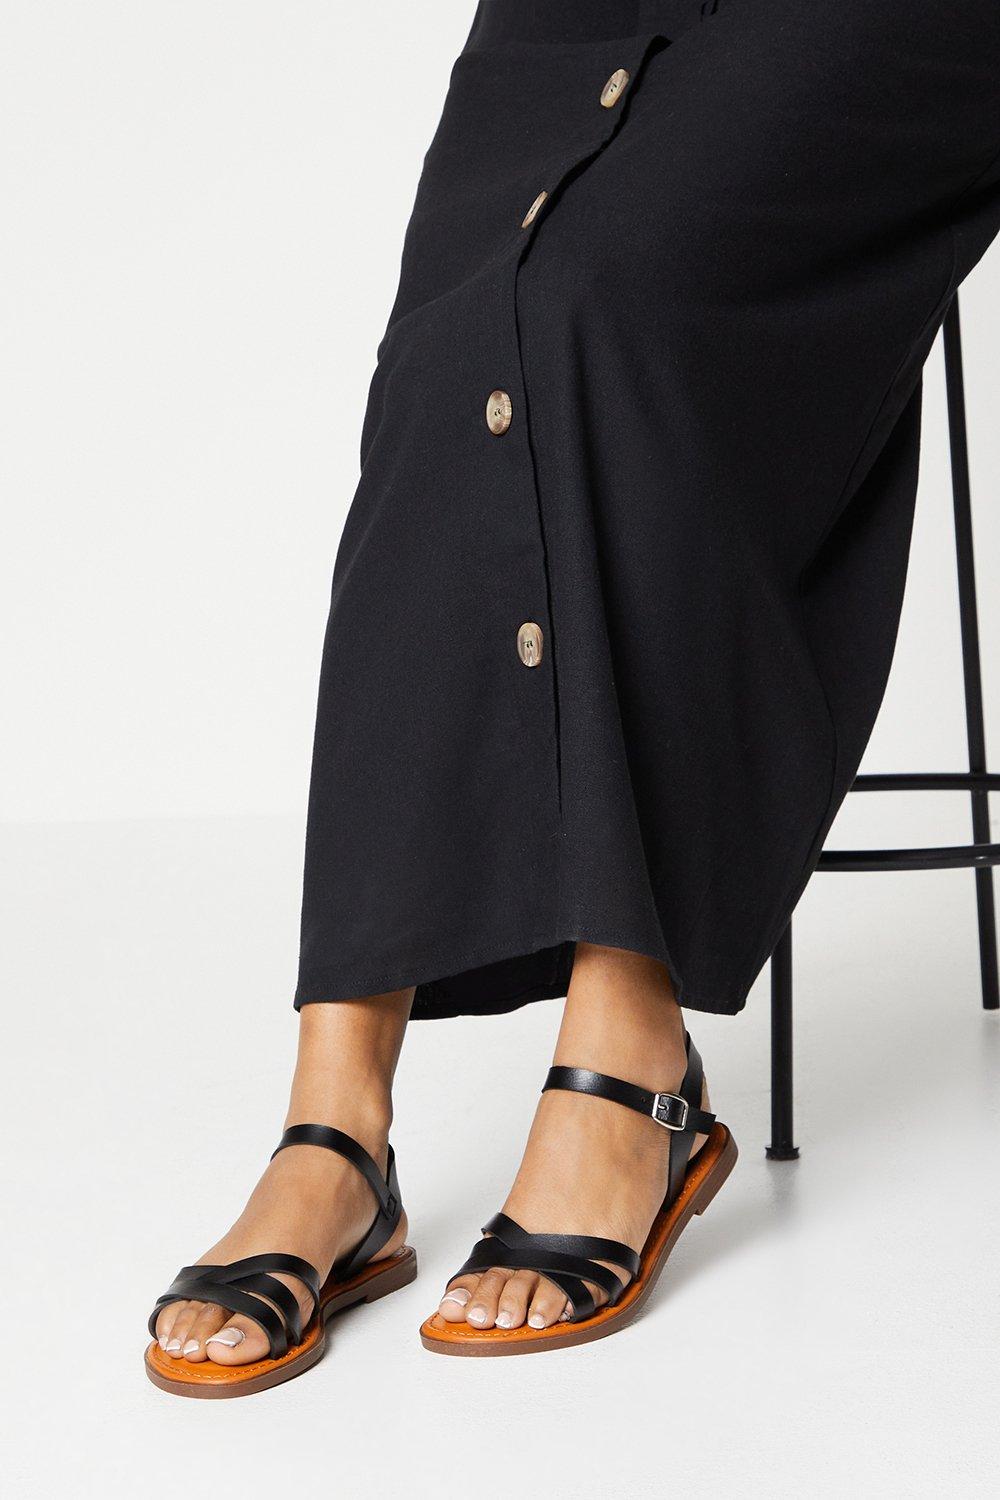 Women’s Good For The Sole: Melanie Comfort Cross Strap Flat Sandals - black - 4